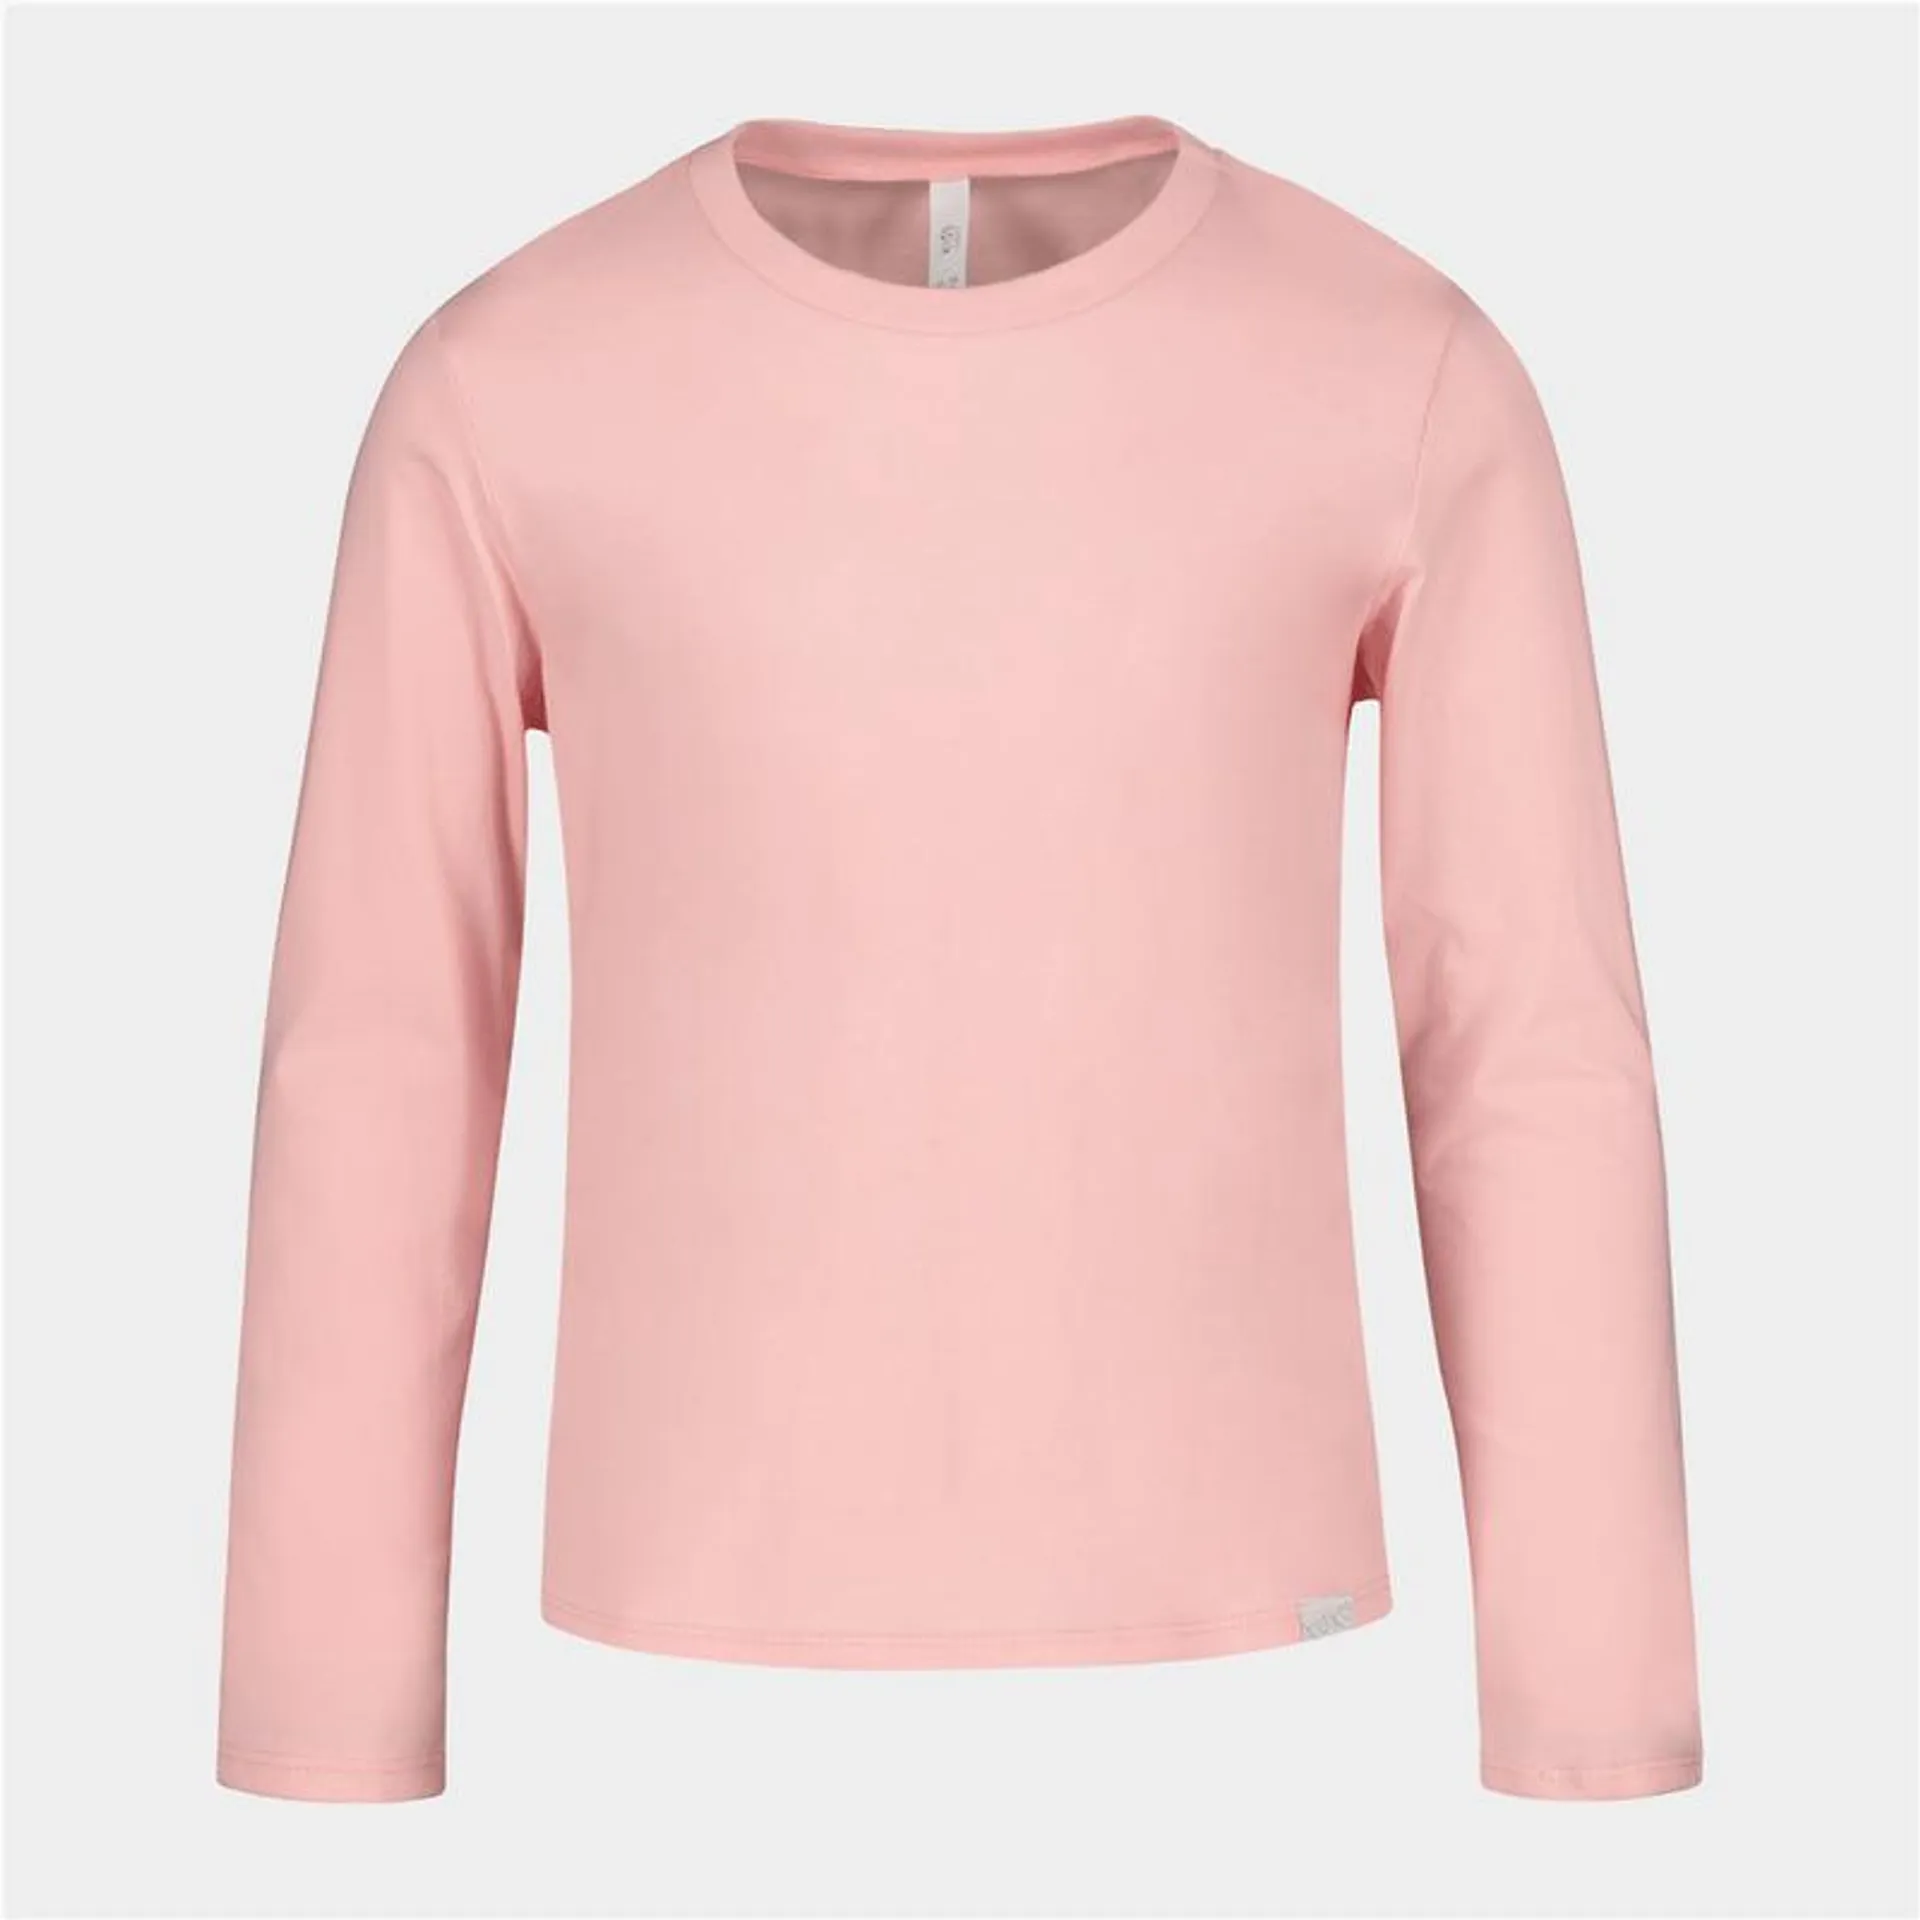 Older Girl's Pink Basic T-Shirt